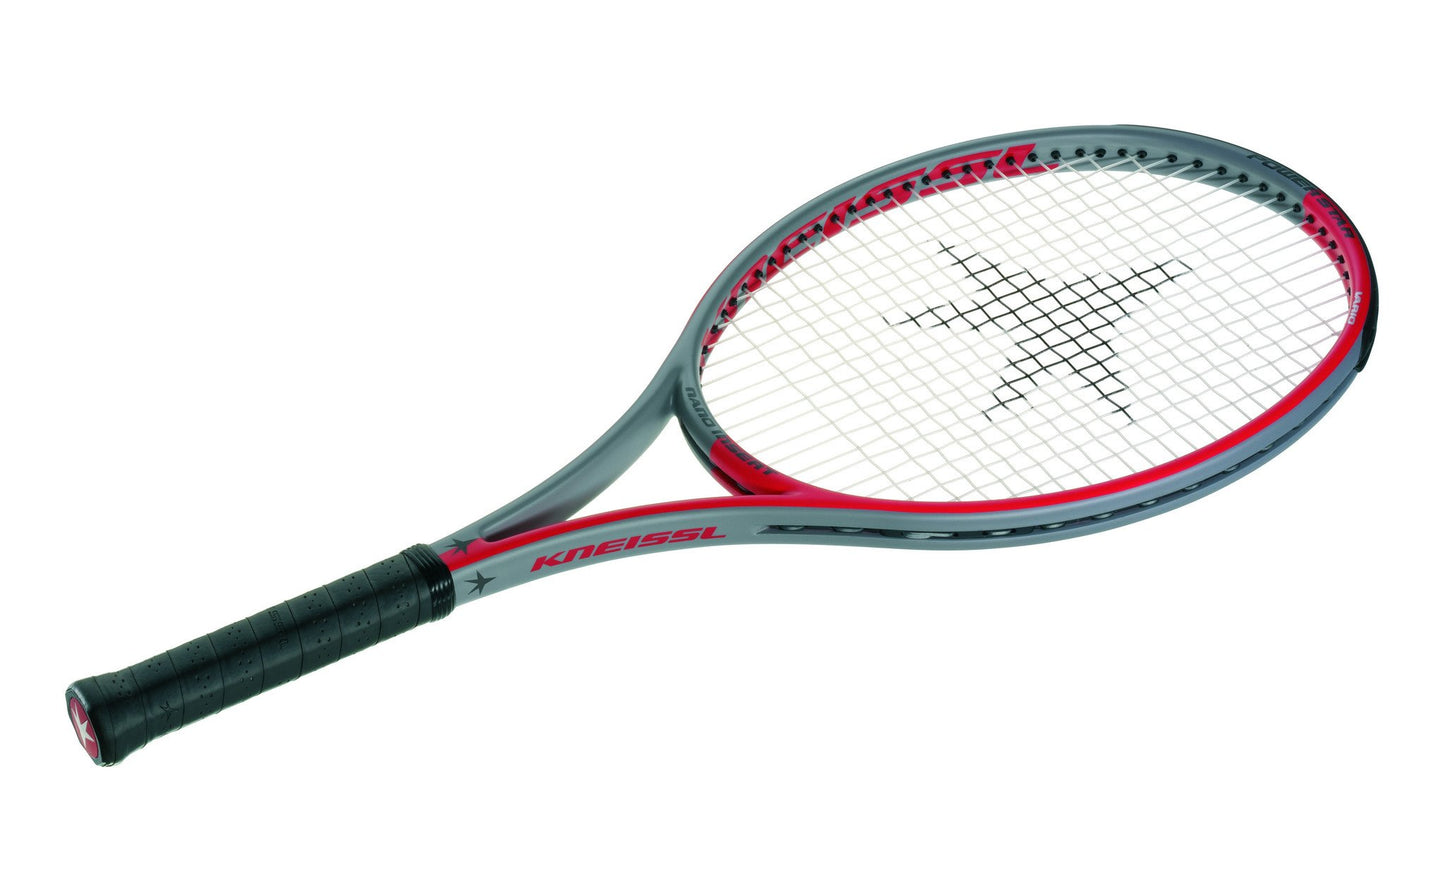 Power Star G5 2007 Vintage Kneissl Tennis Racquet - Last 2, hurry!